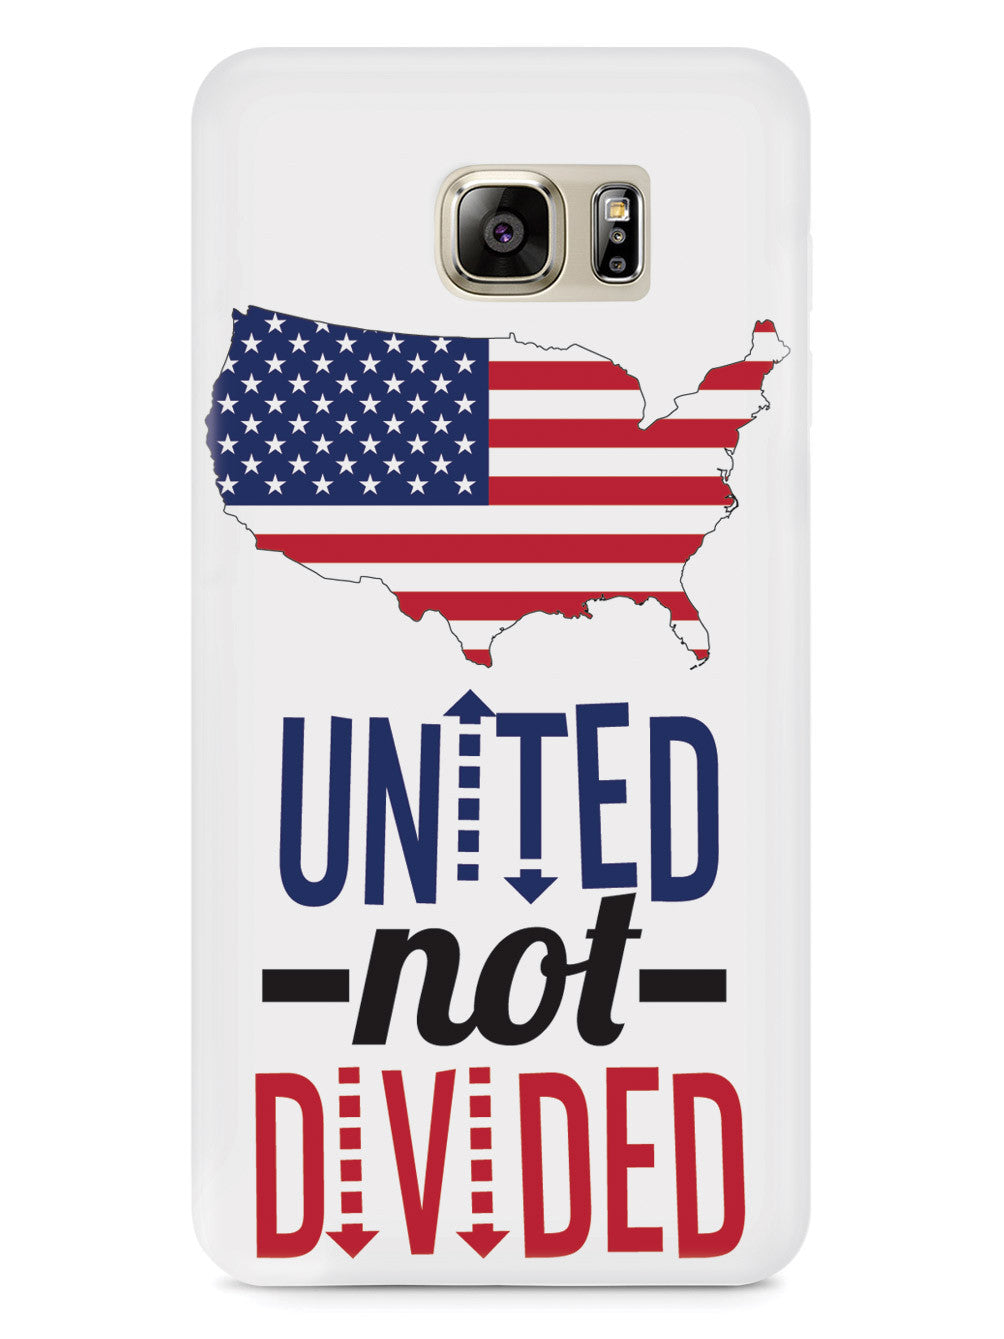 USA - United NOT Divided - White Case